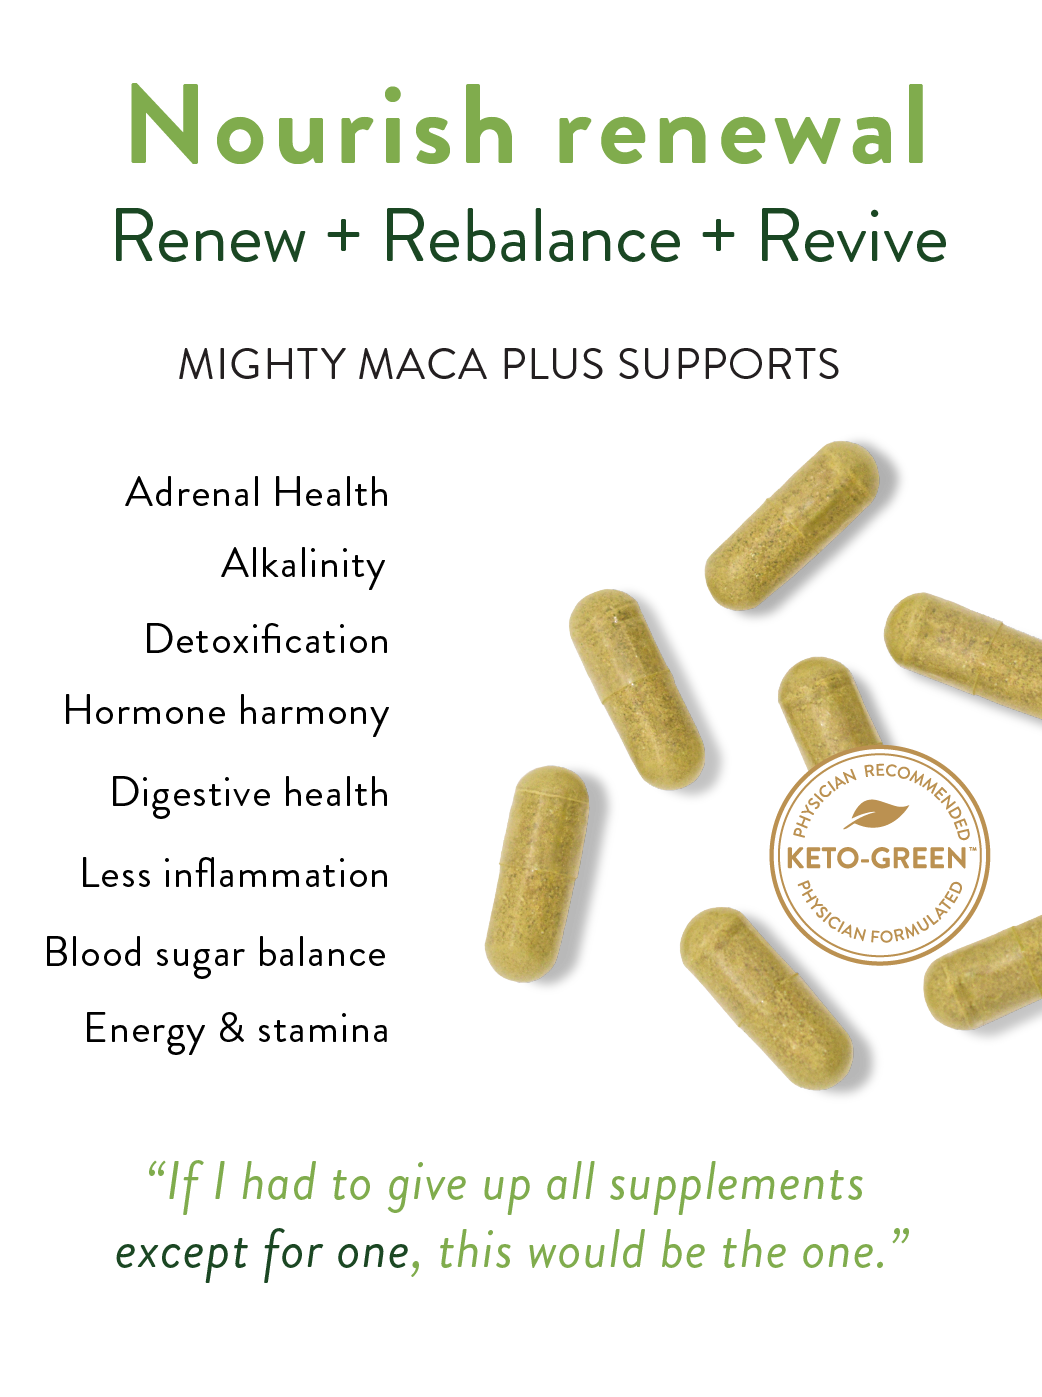 Nourish, Renew, Rebalance, Revive. Mighty Maca supports adrenal health, alkalinity, detoxification, hormone harmony, digestive health, less inflammation, blood sugar balance, energy & stamina